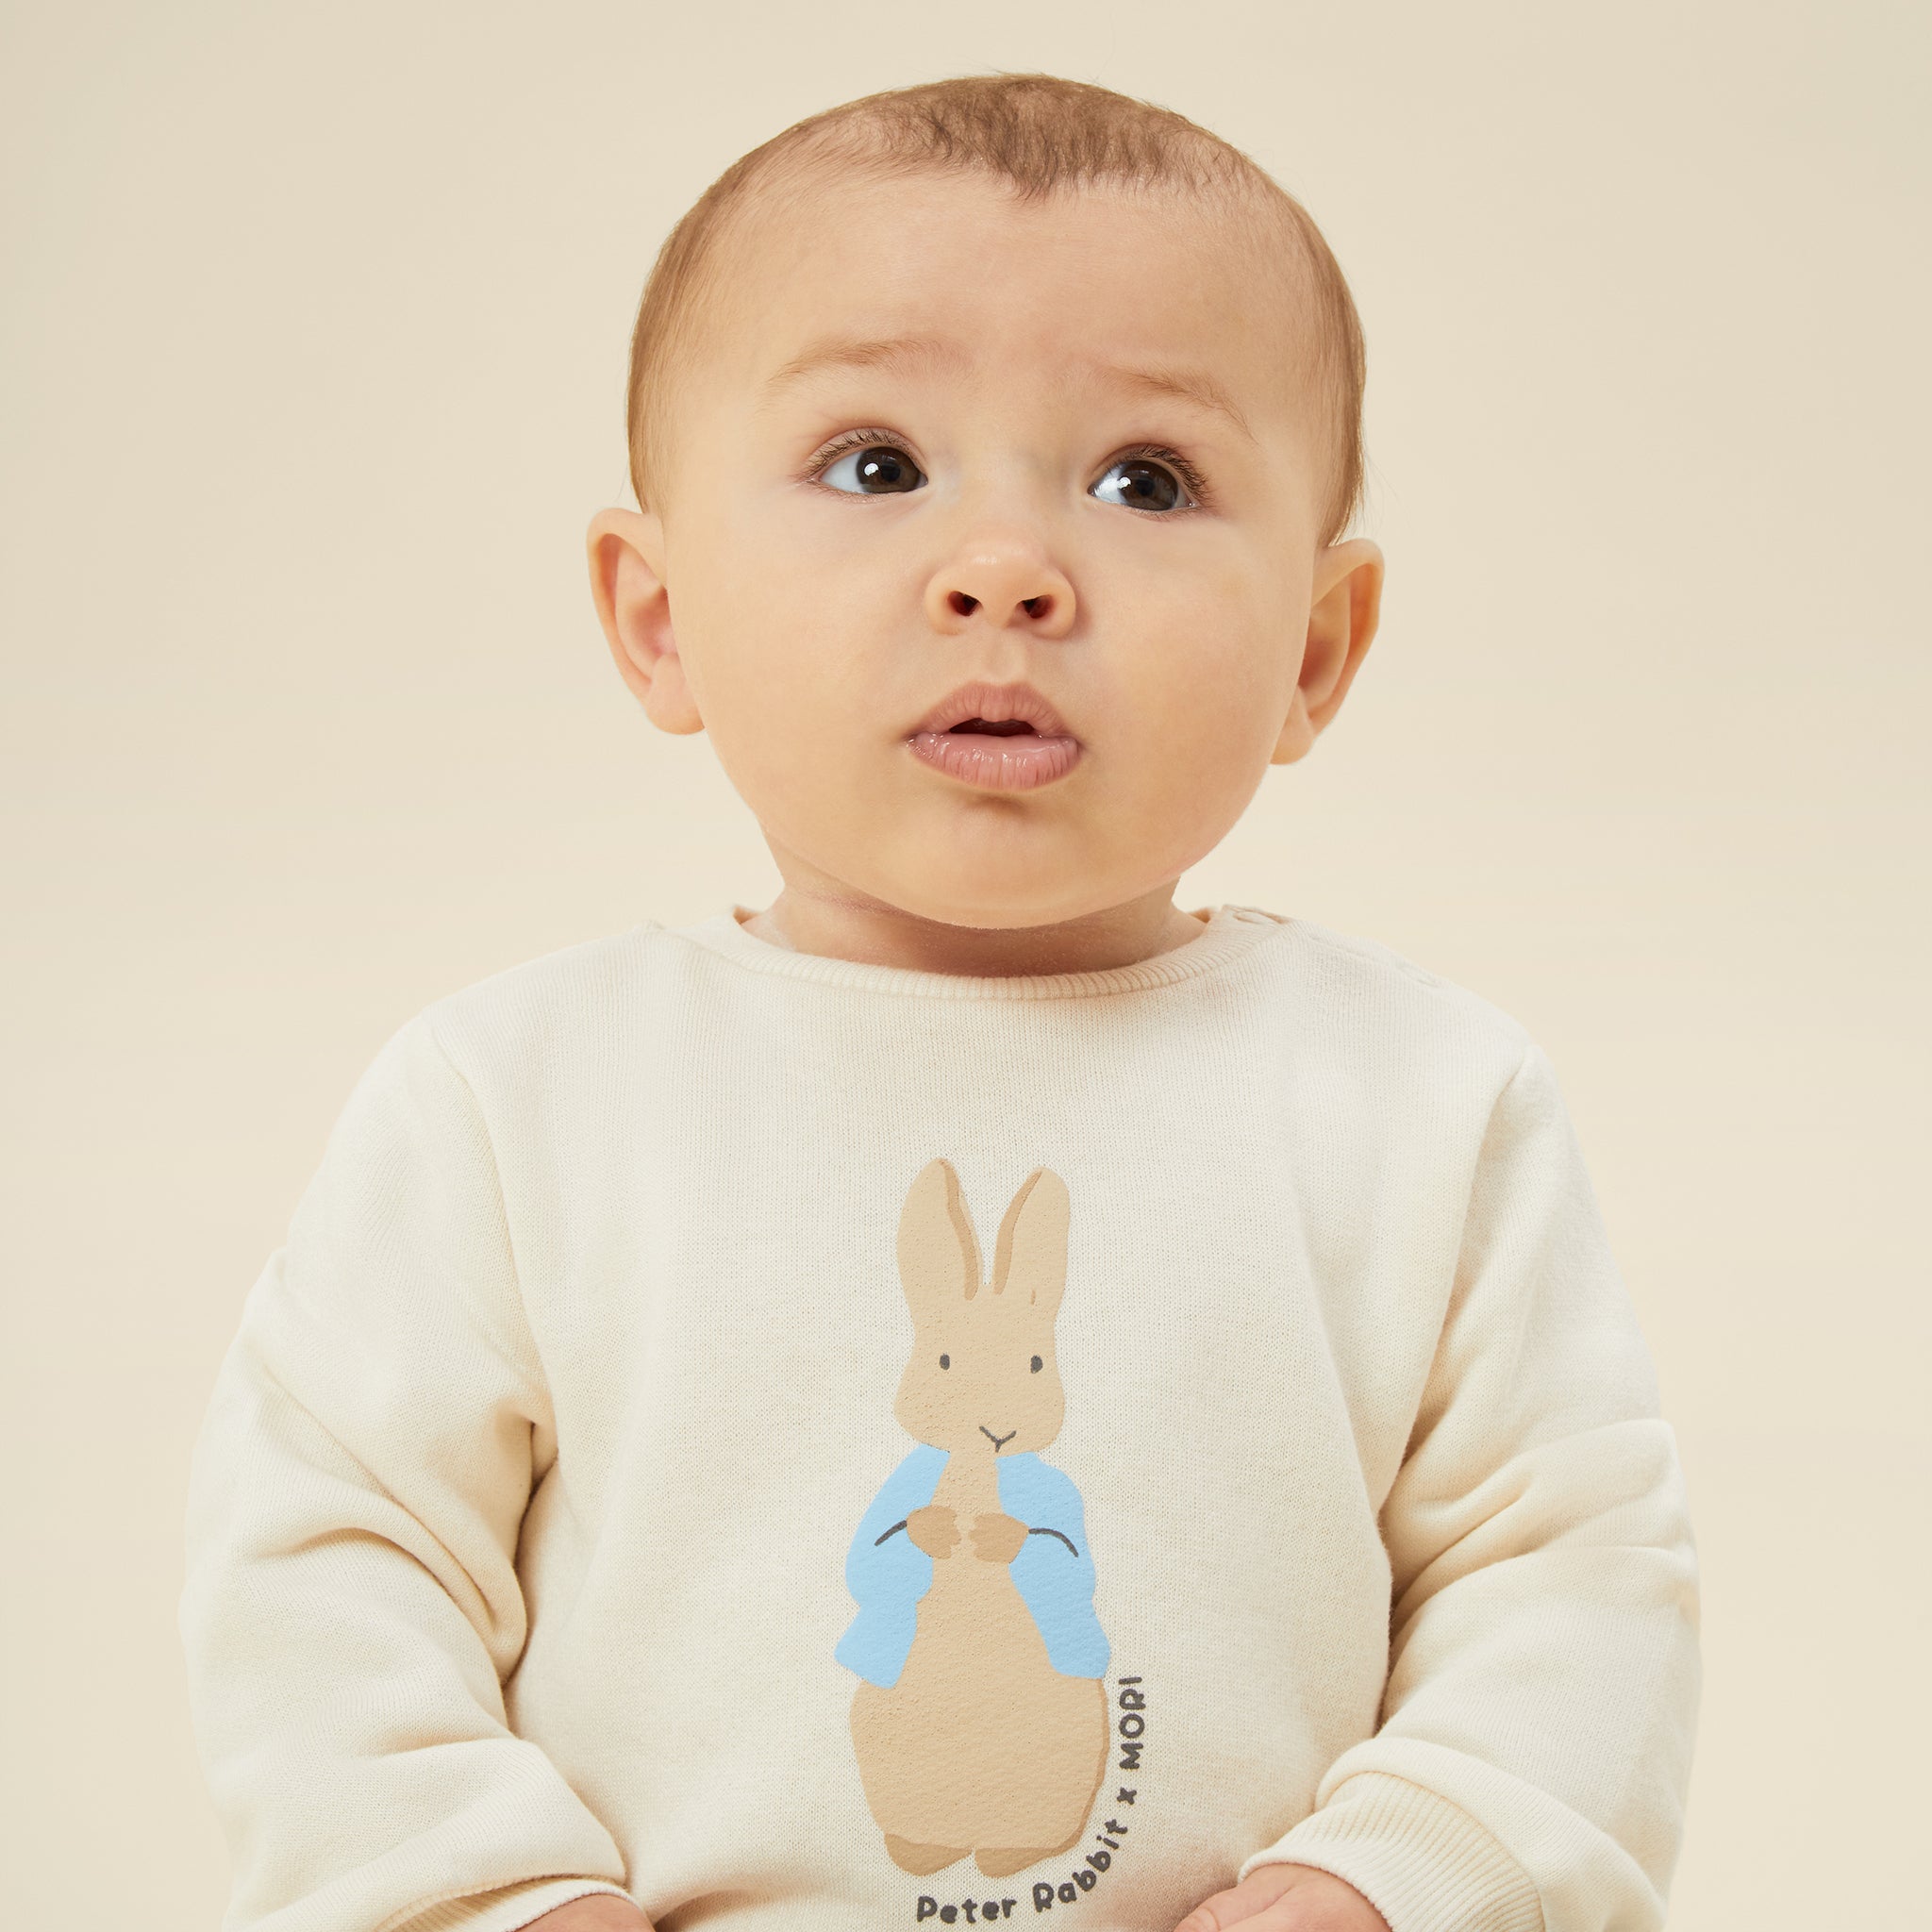 Rabbit Ears Hooded Newborn Romper Infant Bodysuit Jumpsuit With Infant  Sleeping Bag And Zipper Closure RRA3572 From Liangjingjing_no3, $7.23 |  DHgate.Com